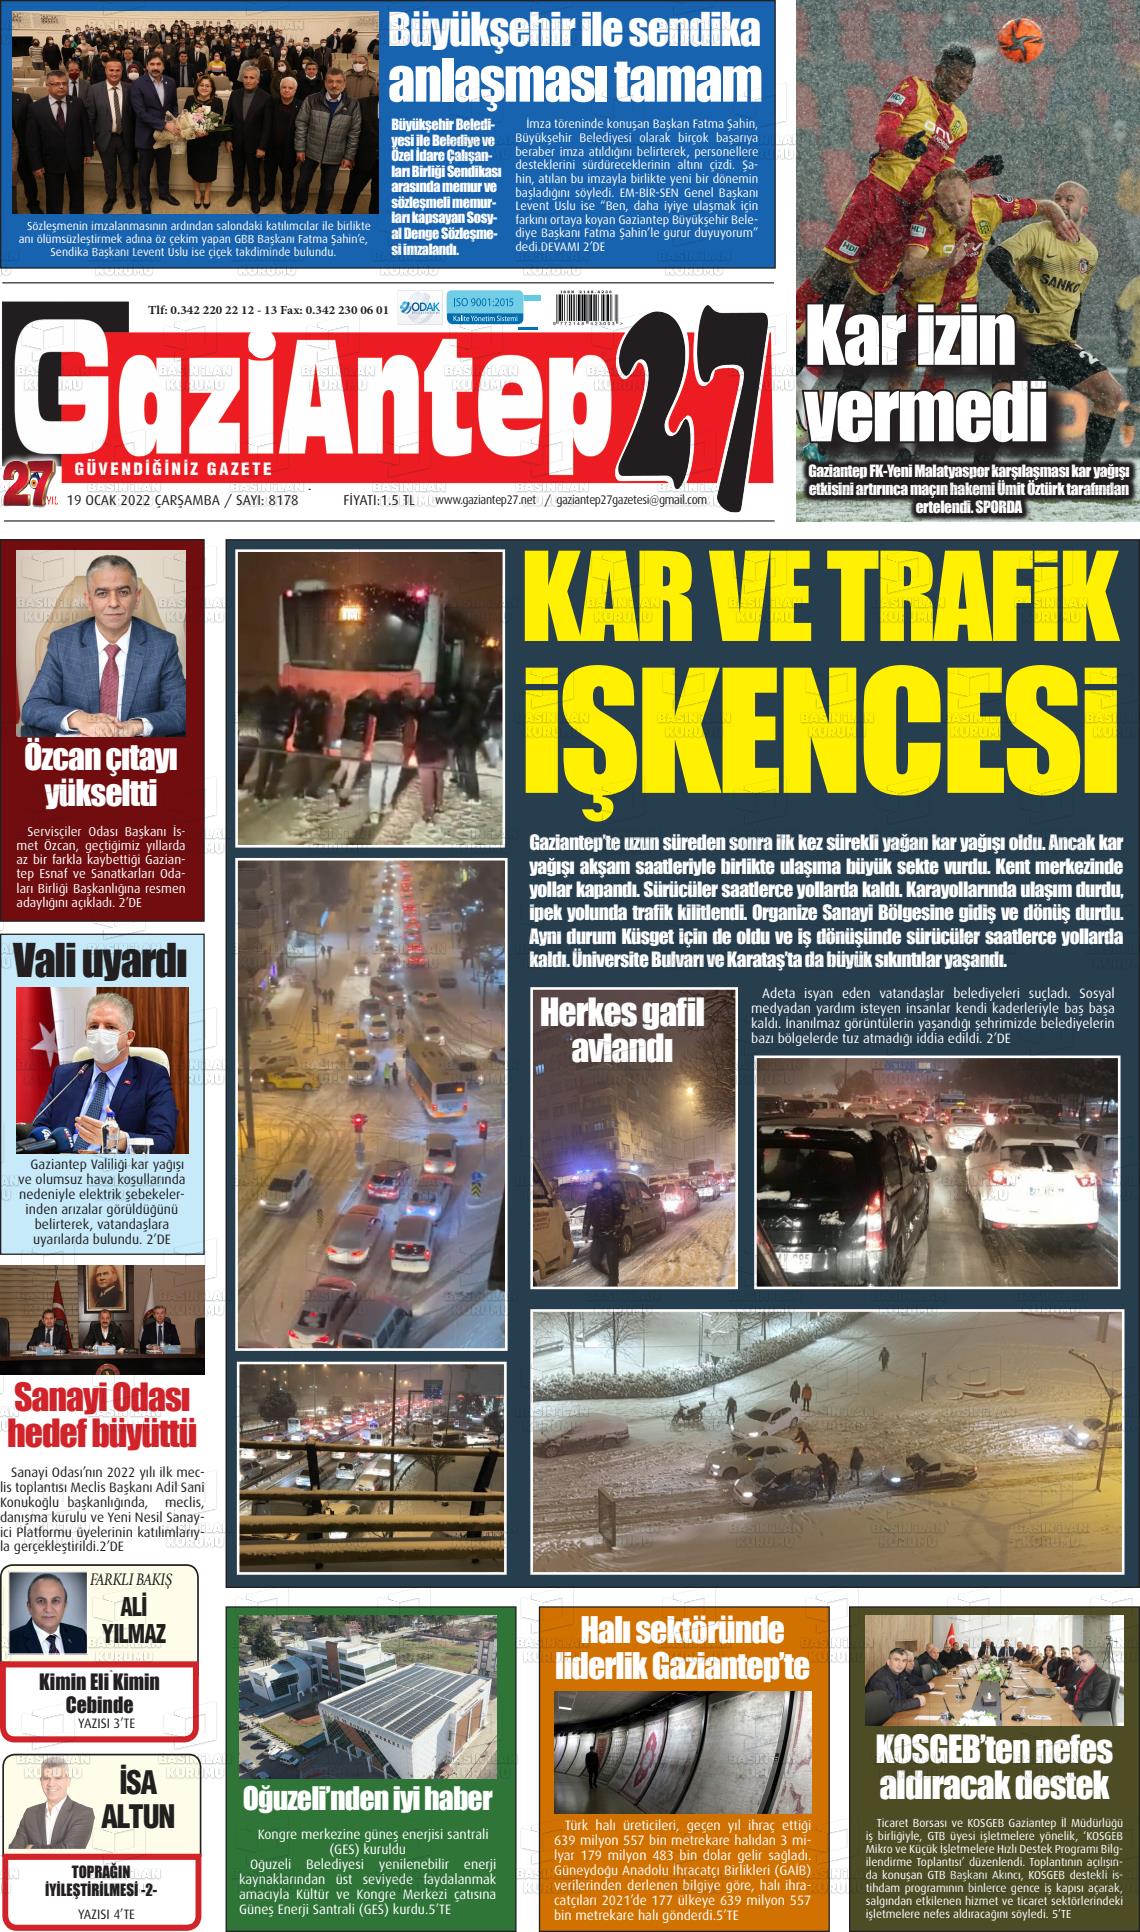 19 Ocak 2022 Gaziantep 27 Gazete Manşeti